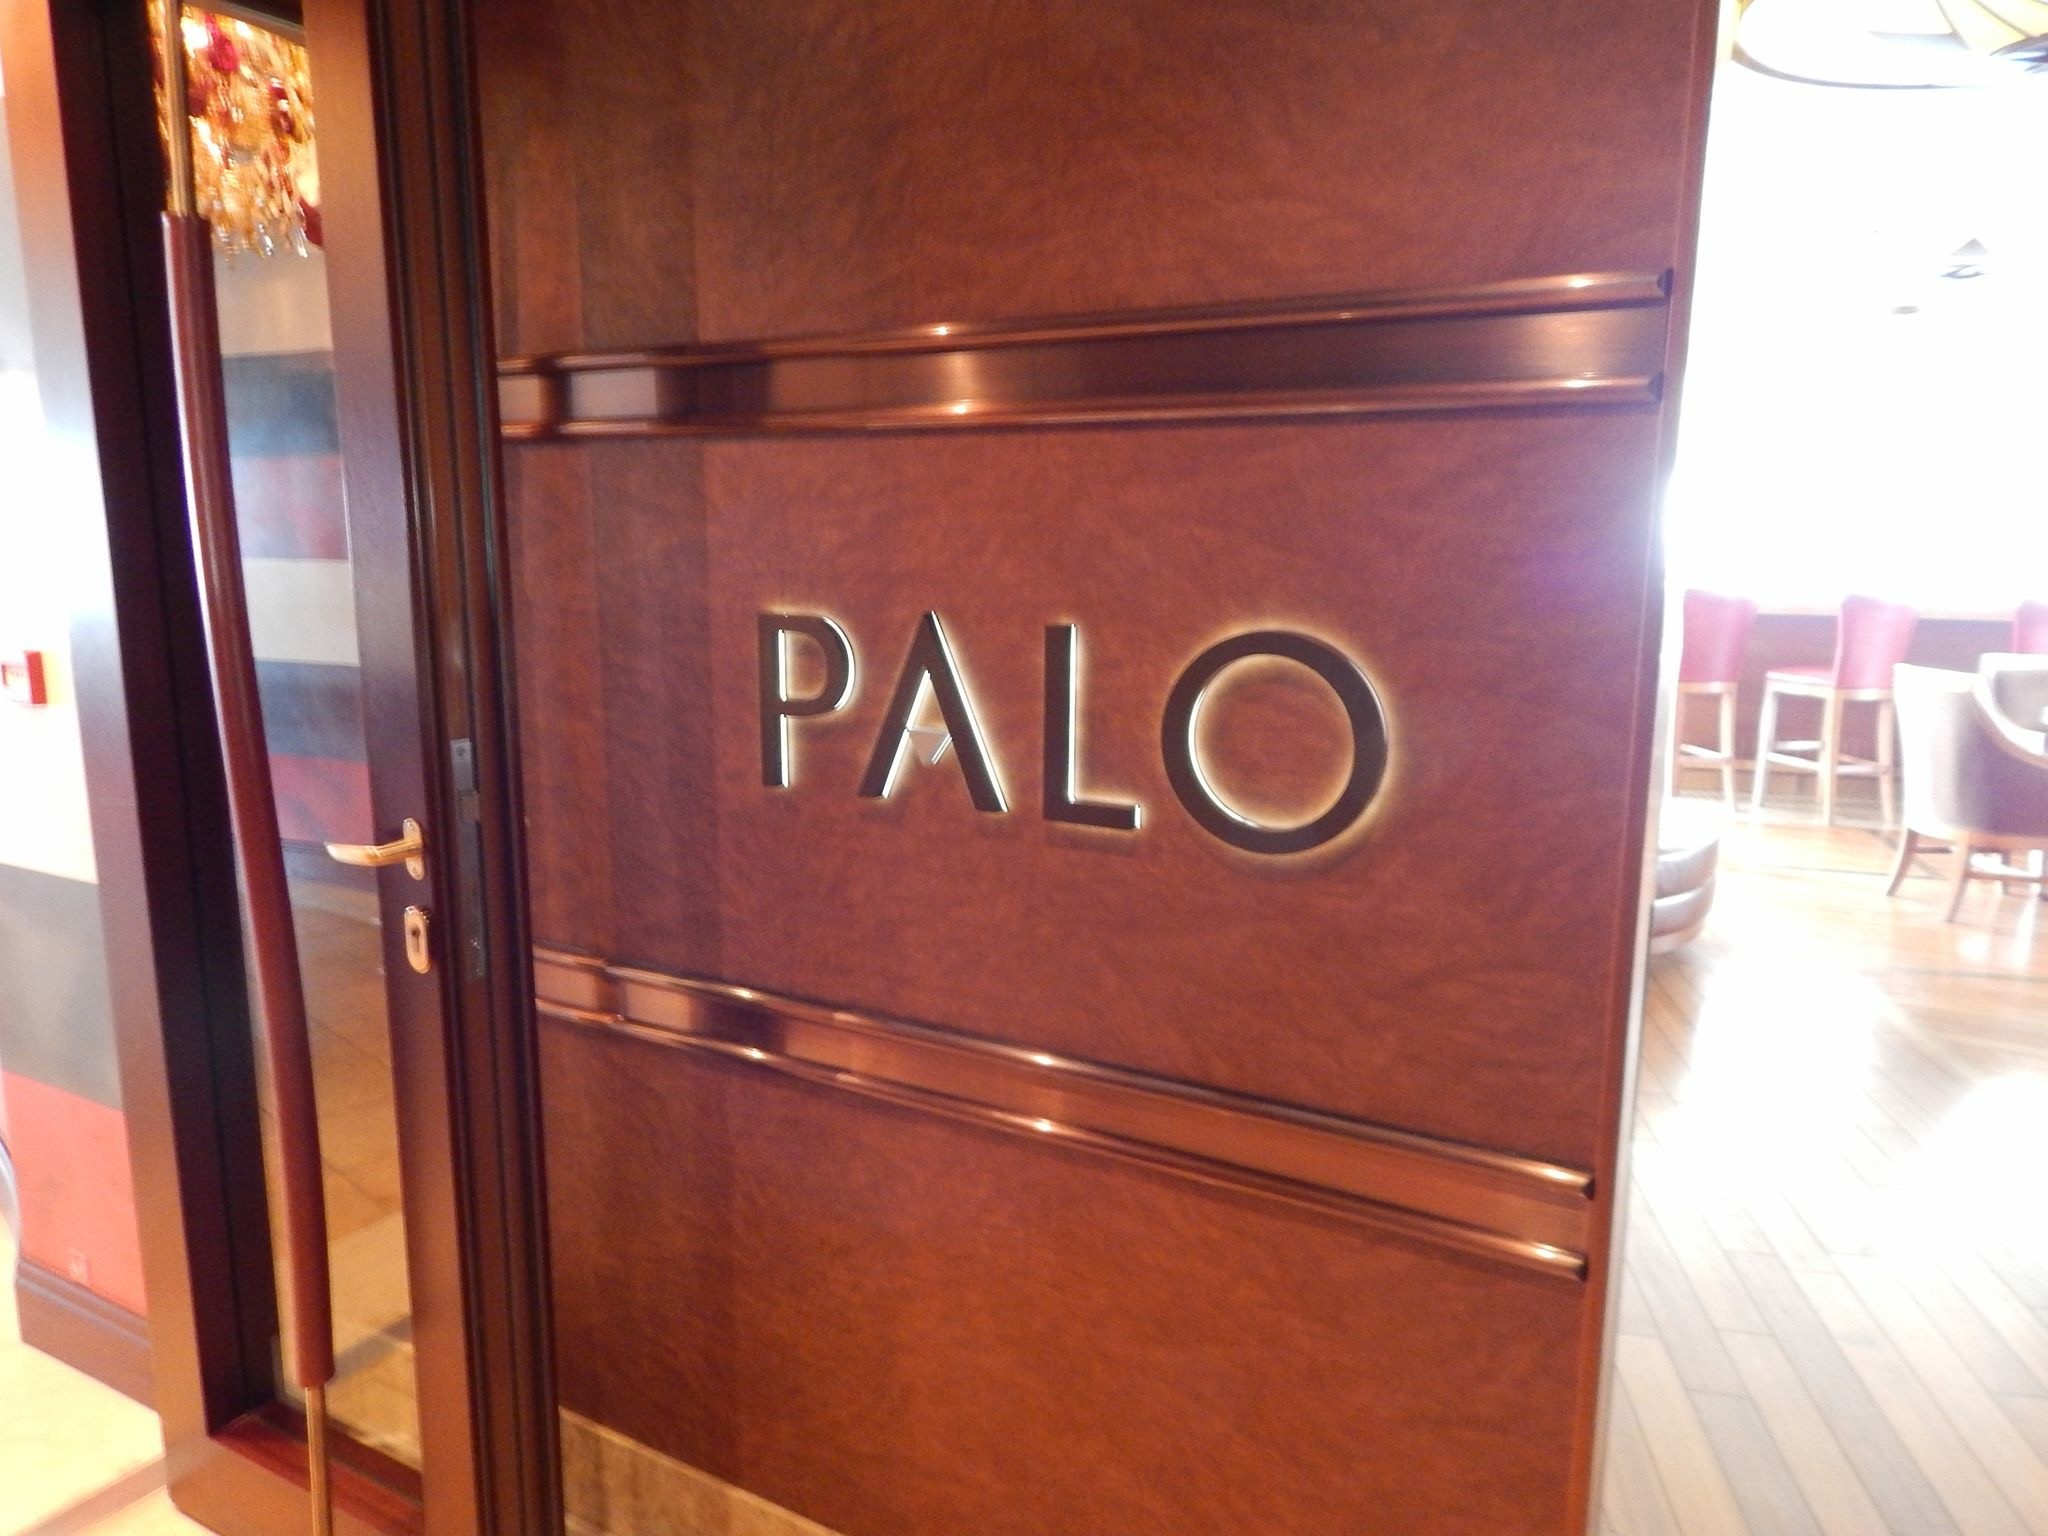 Updated Dress Code for Palo Restaurant on Disney Cruise Ships